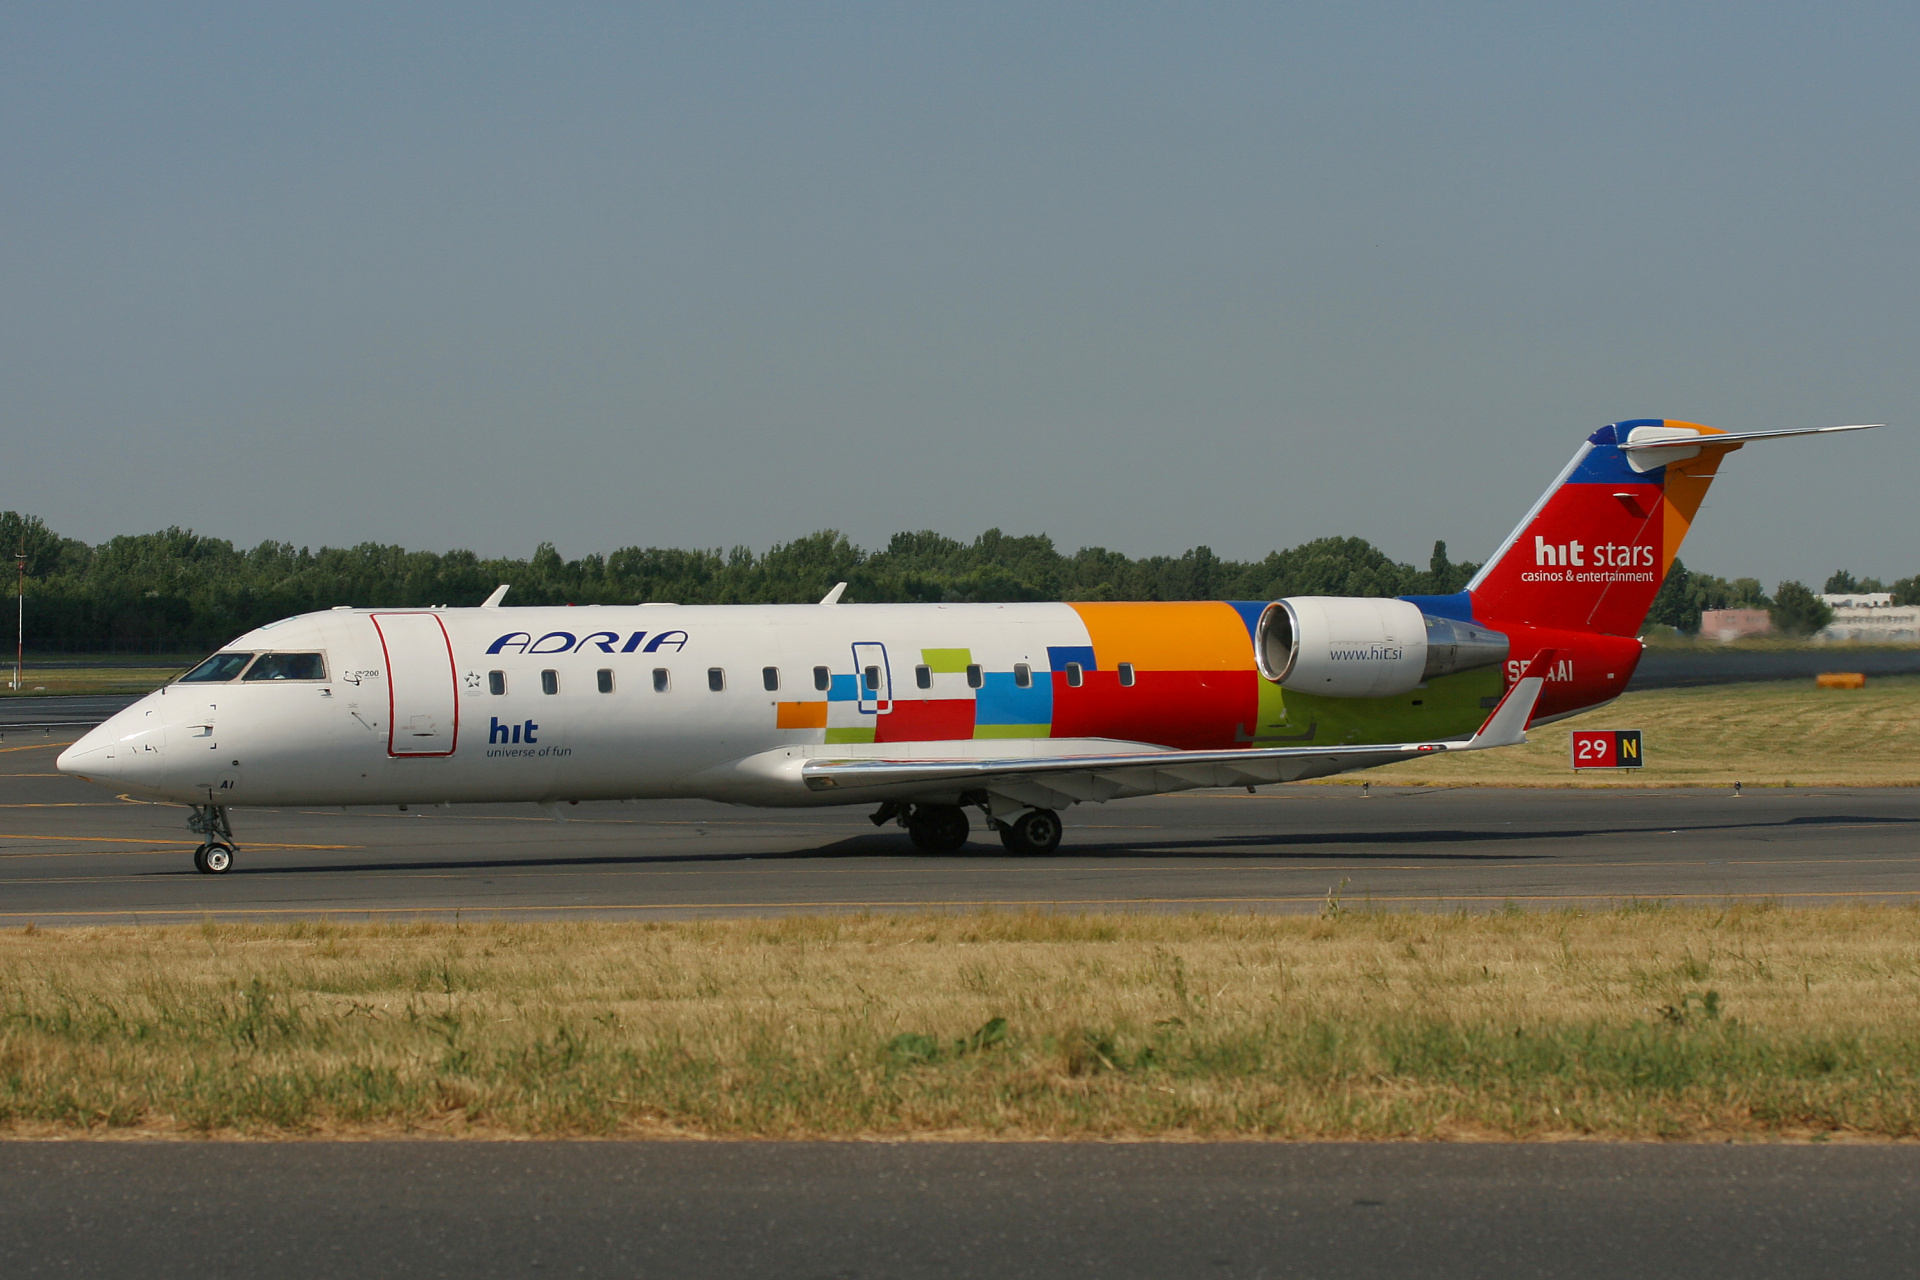 S5-AAI (Hit Stars livery) (Aircraft » EPWA Spotting » Bombardier CL-600 Regional Jet » CRJ-200 » Adria Airways)